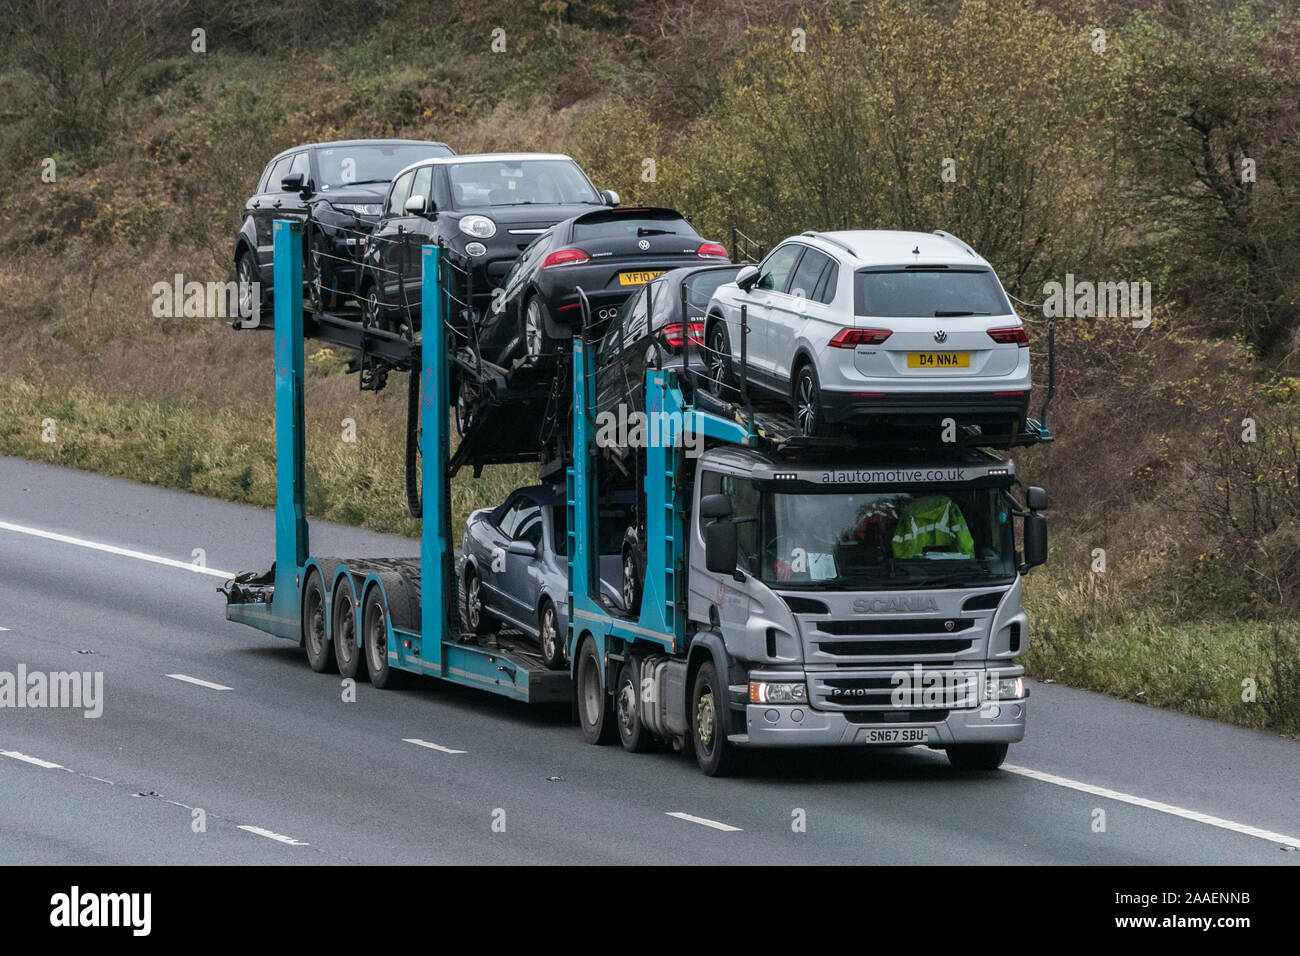 Vehicular traffic, transport, modern vehicles, saloon cars, south-bound motoring on the M61 motorway, UK Stock Photo